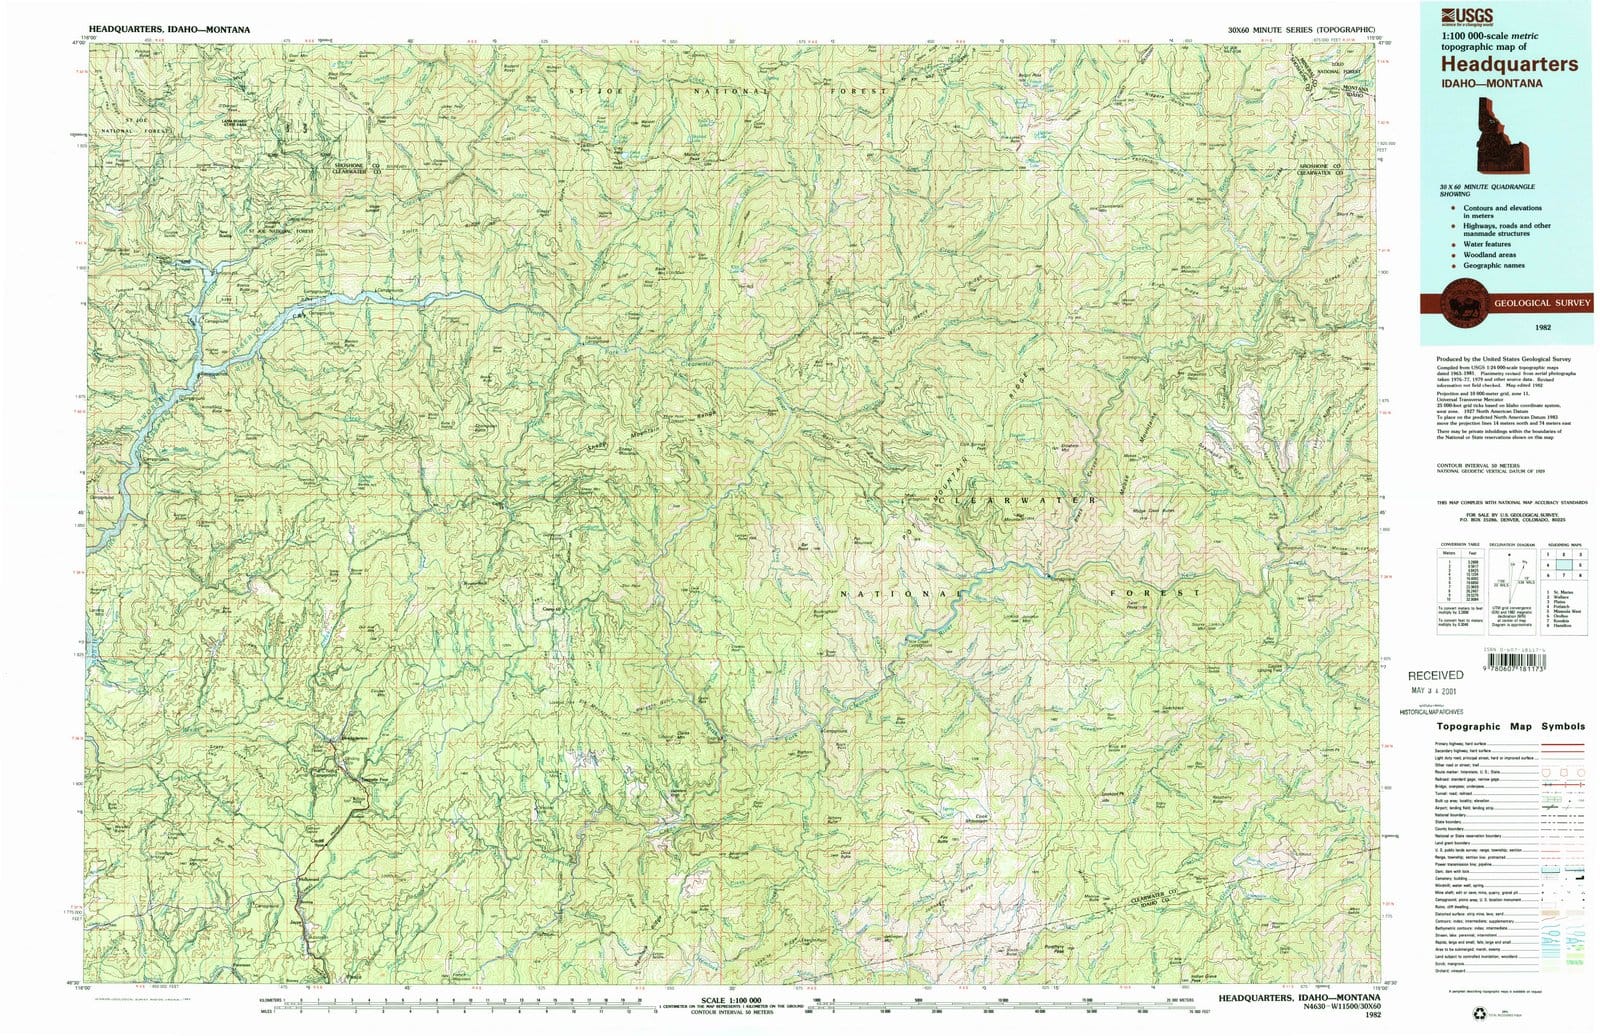 1982 Headquarters, ID - Idaho - USGS Topographic Map